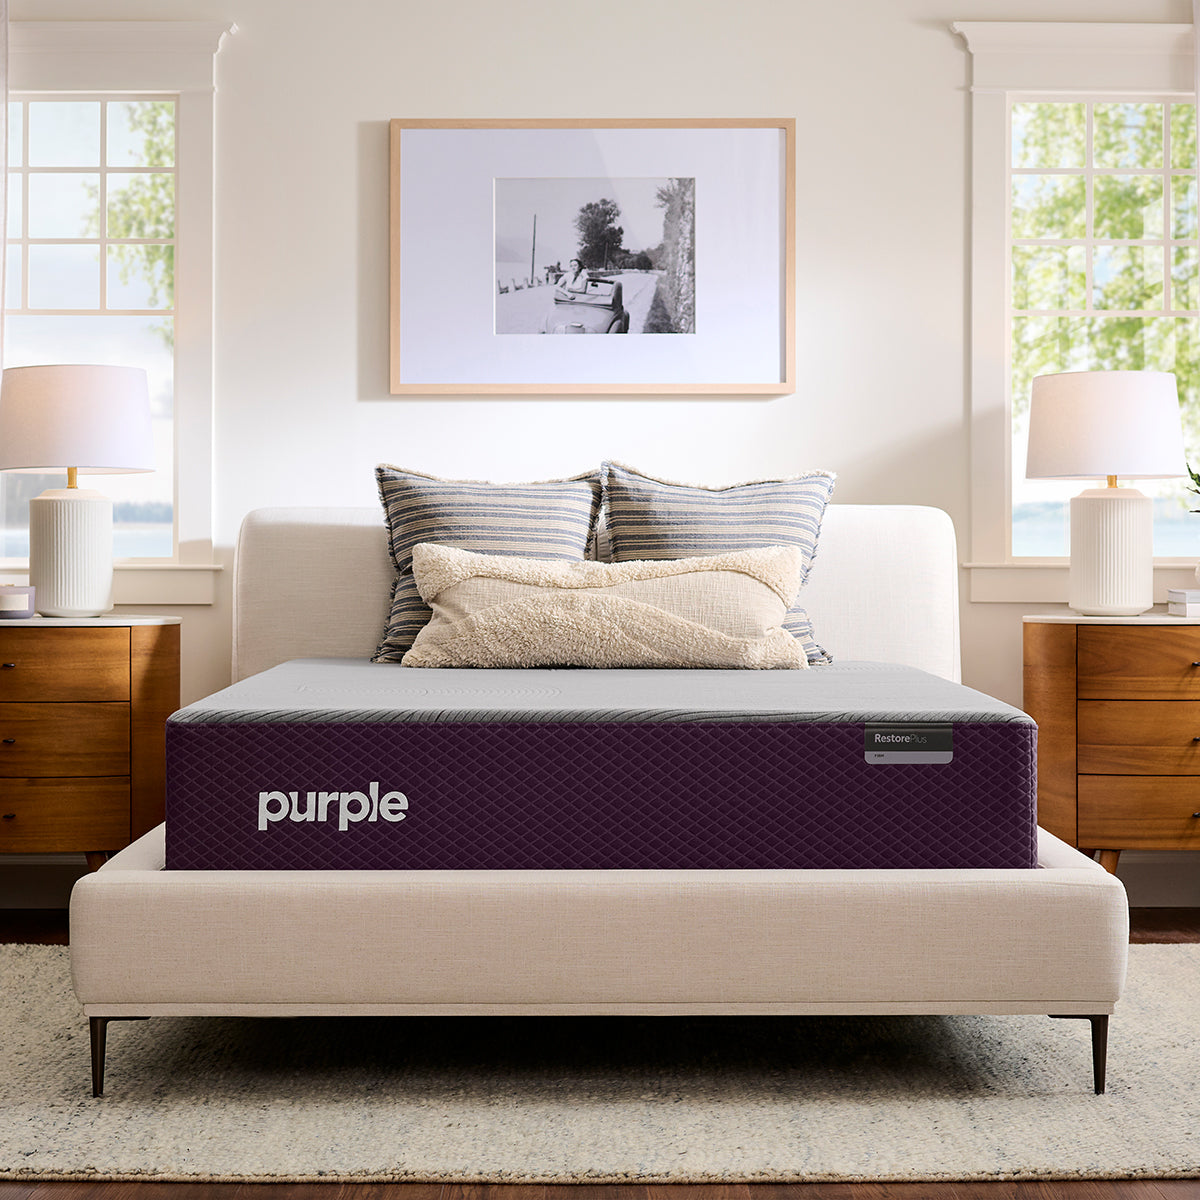 Purple Restore Plus Soft Mattress in bedroom